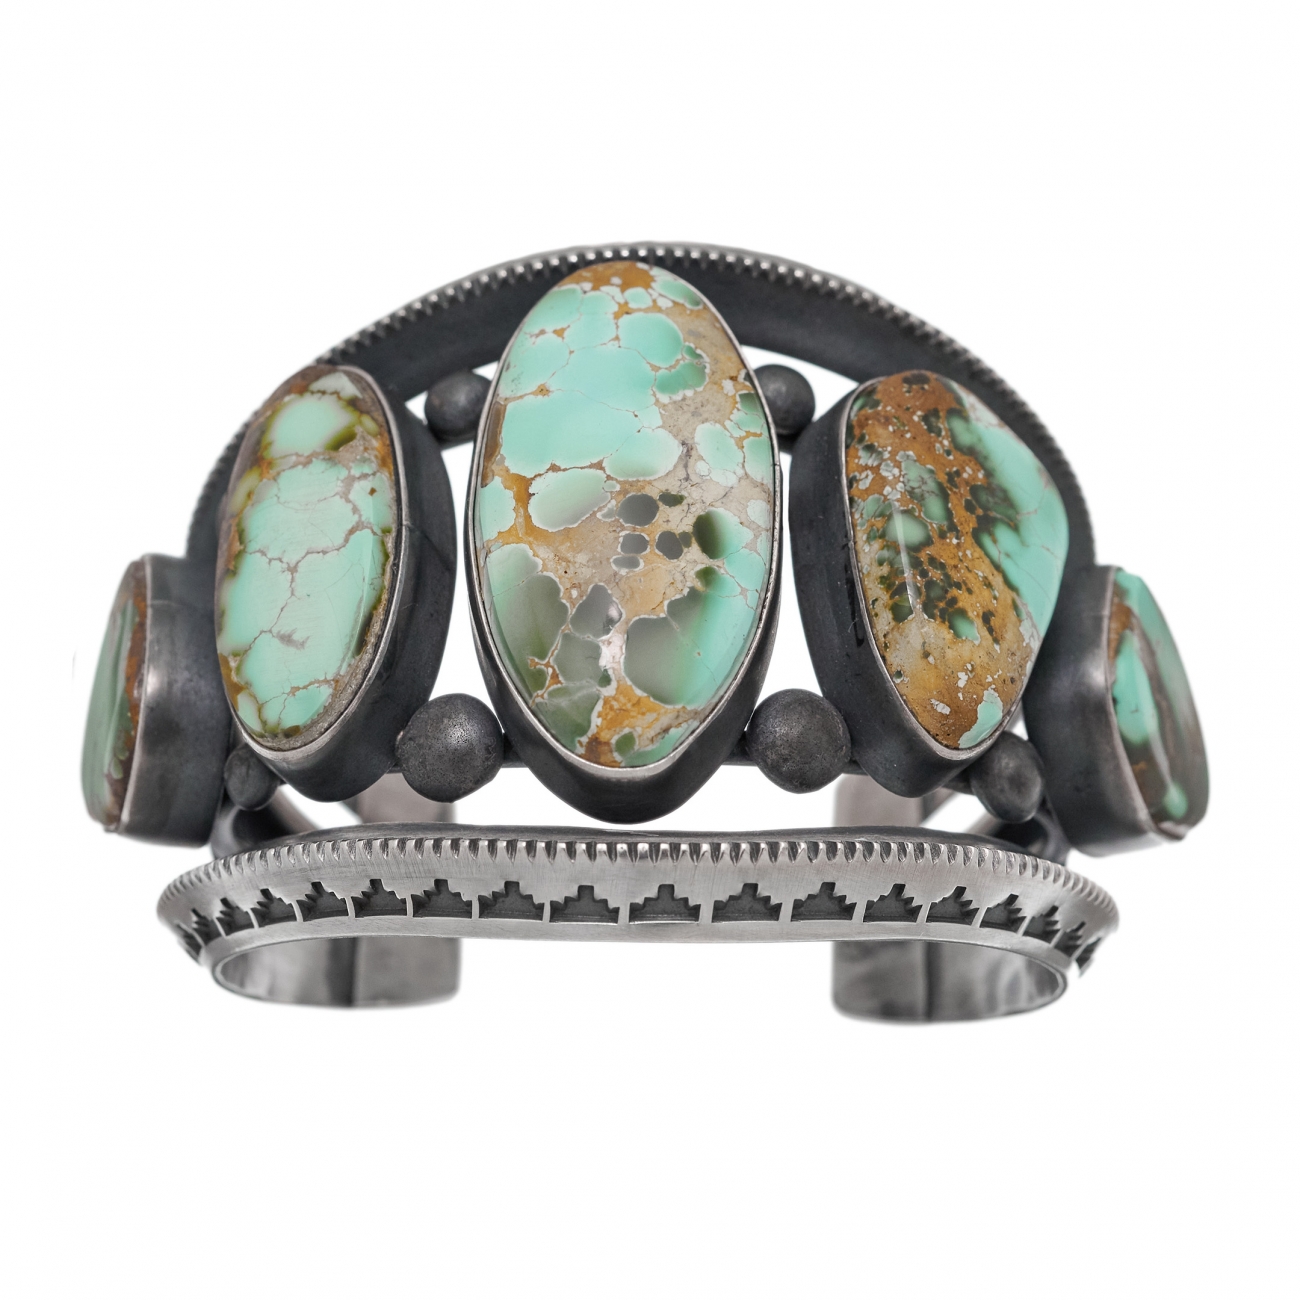 Stunning Navajo bracelet MIS34 in turquoise and silver - Harpo Paris